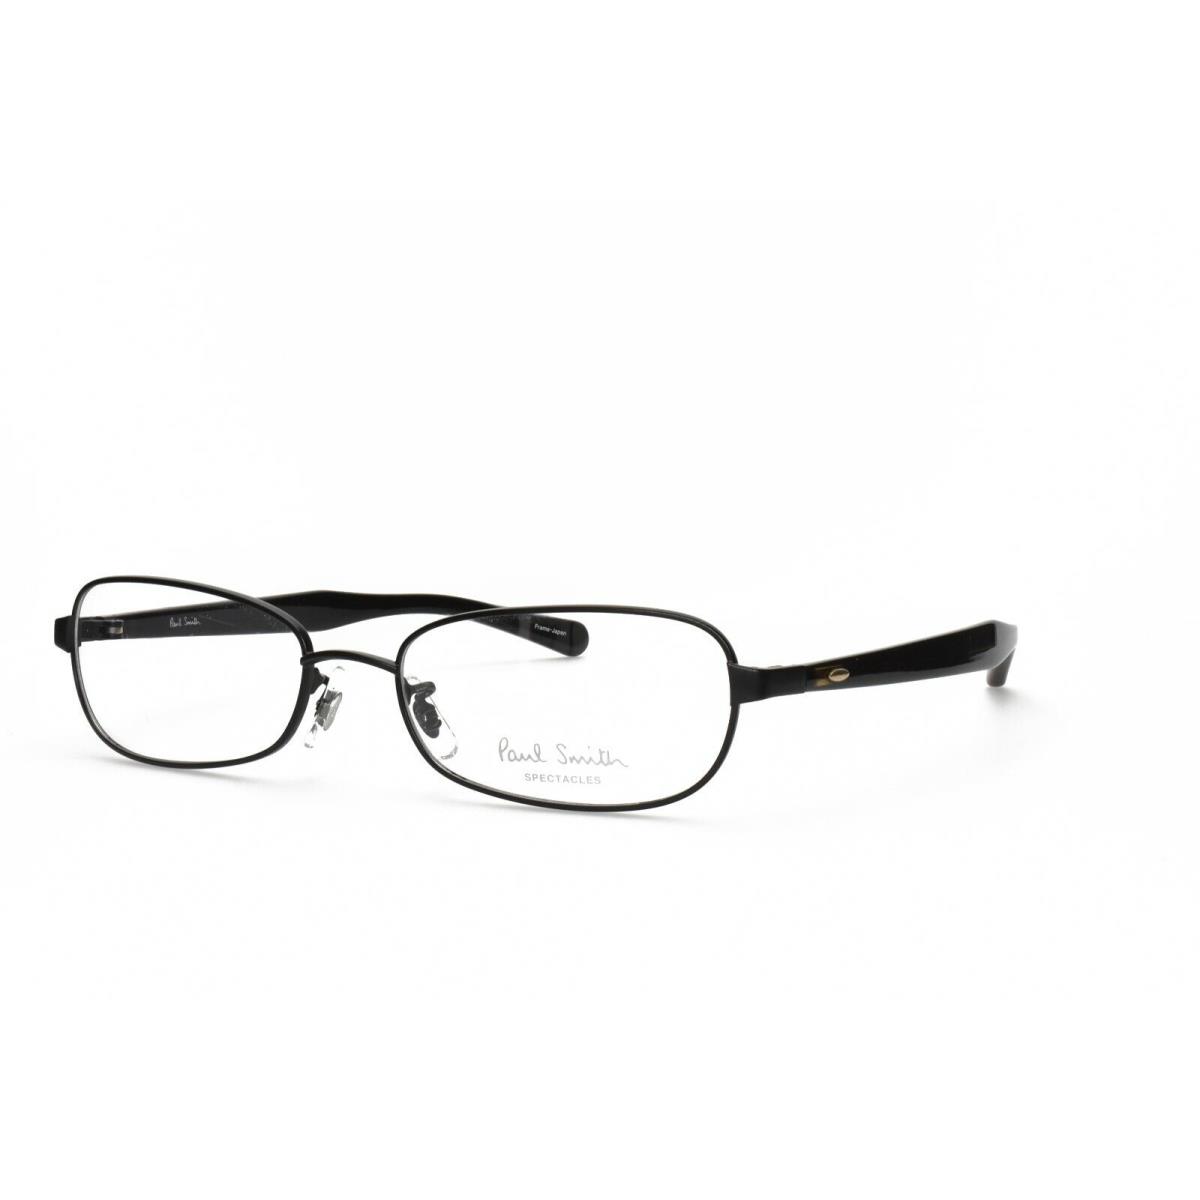 Paul Smith PS 1008 Ox/dtbkox Eyeglasses Frames Only 51-17-130